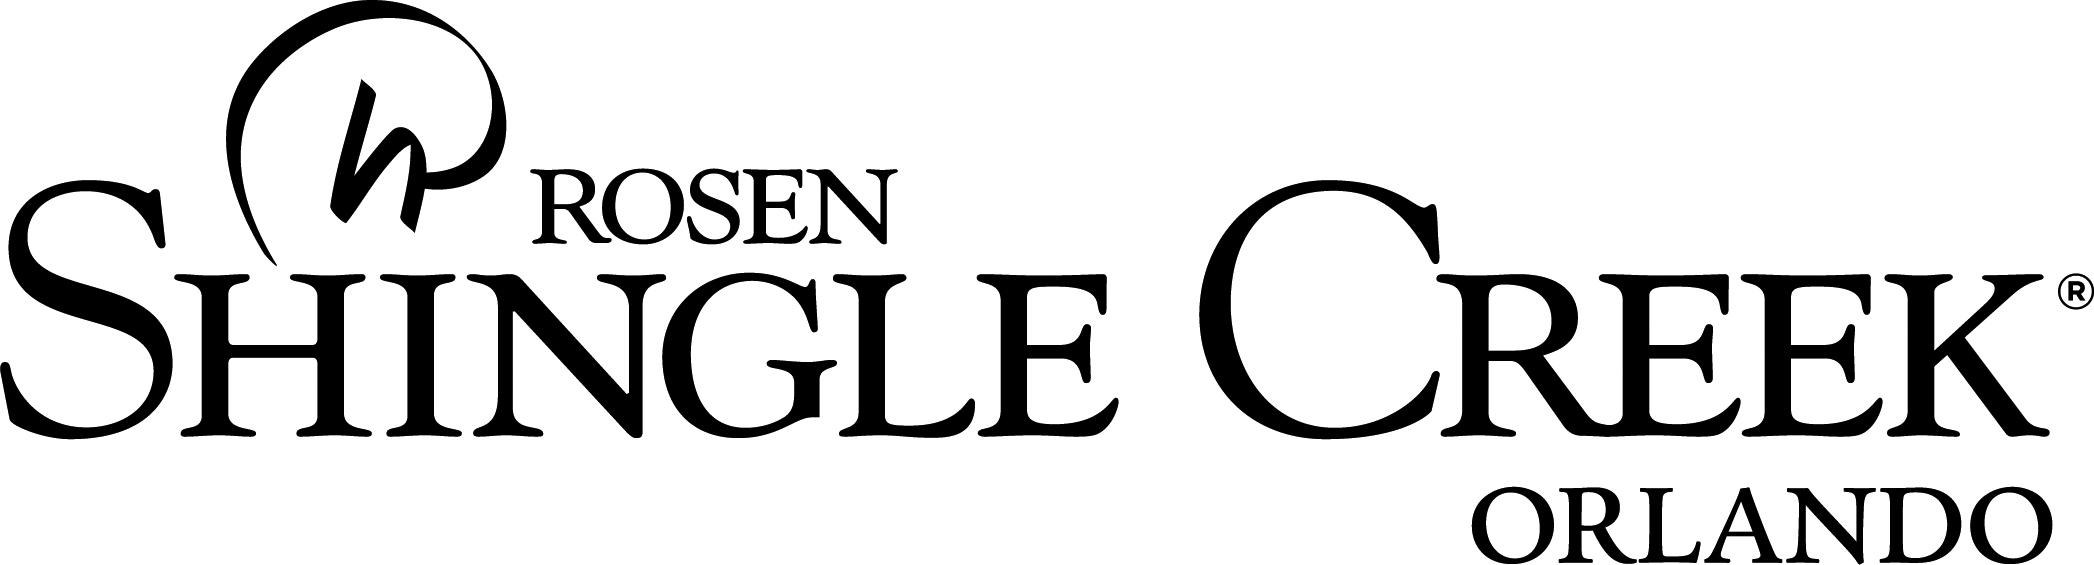 Rosen Shingle Creek Orlando Logo (Black)